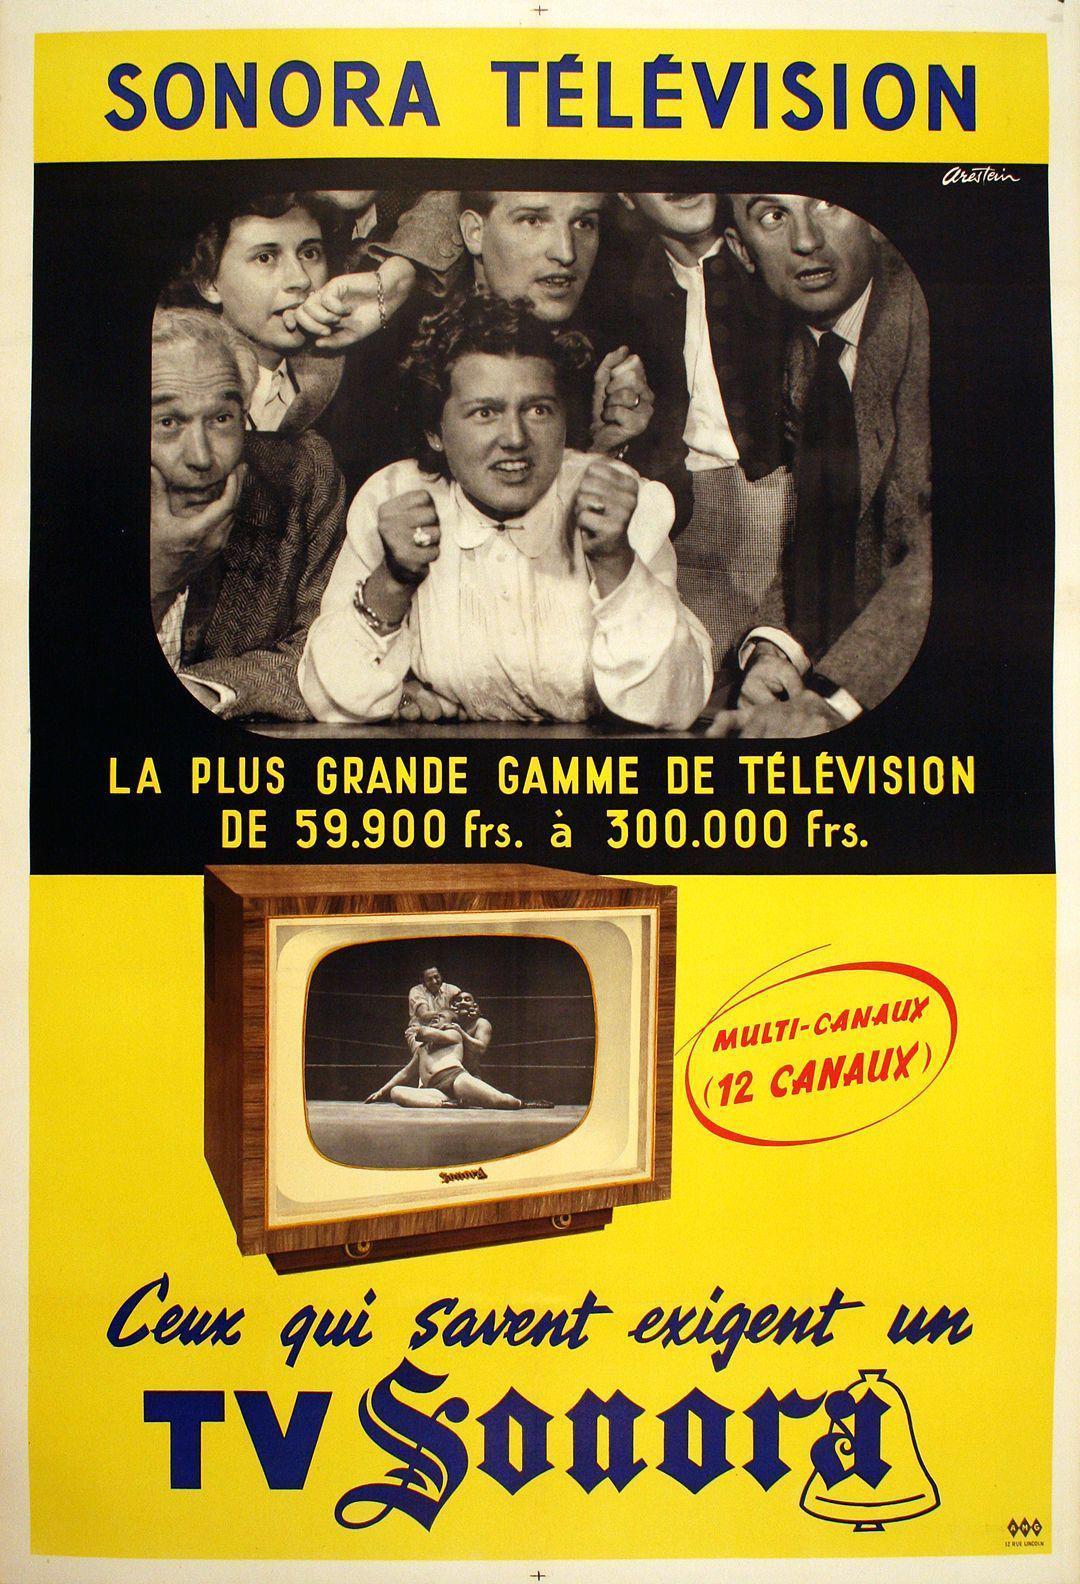 Original Sonora Television Poster c1955 by Arestein - Sonora Lutte Wrestling